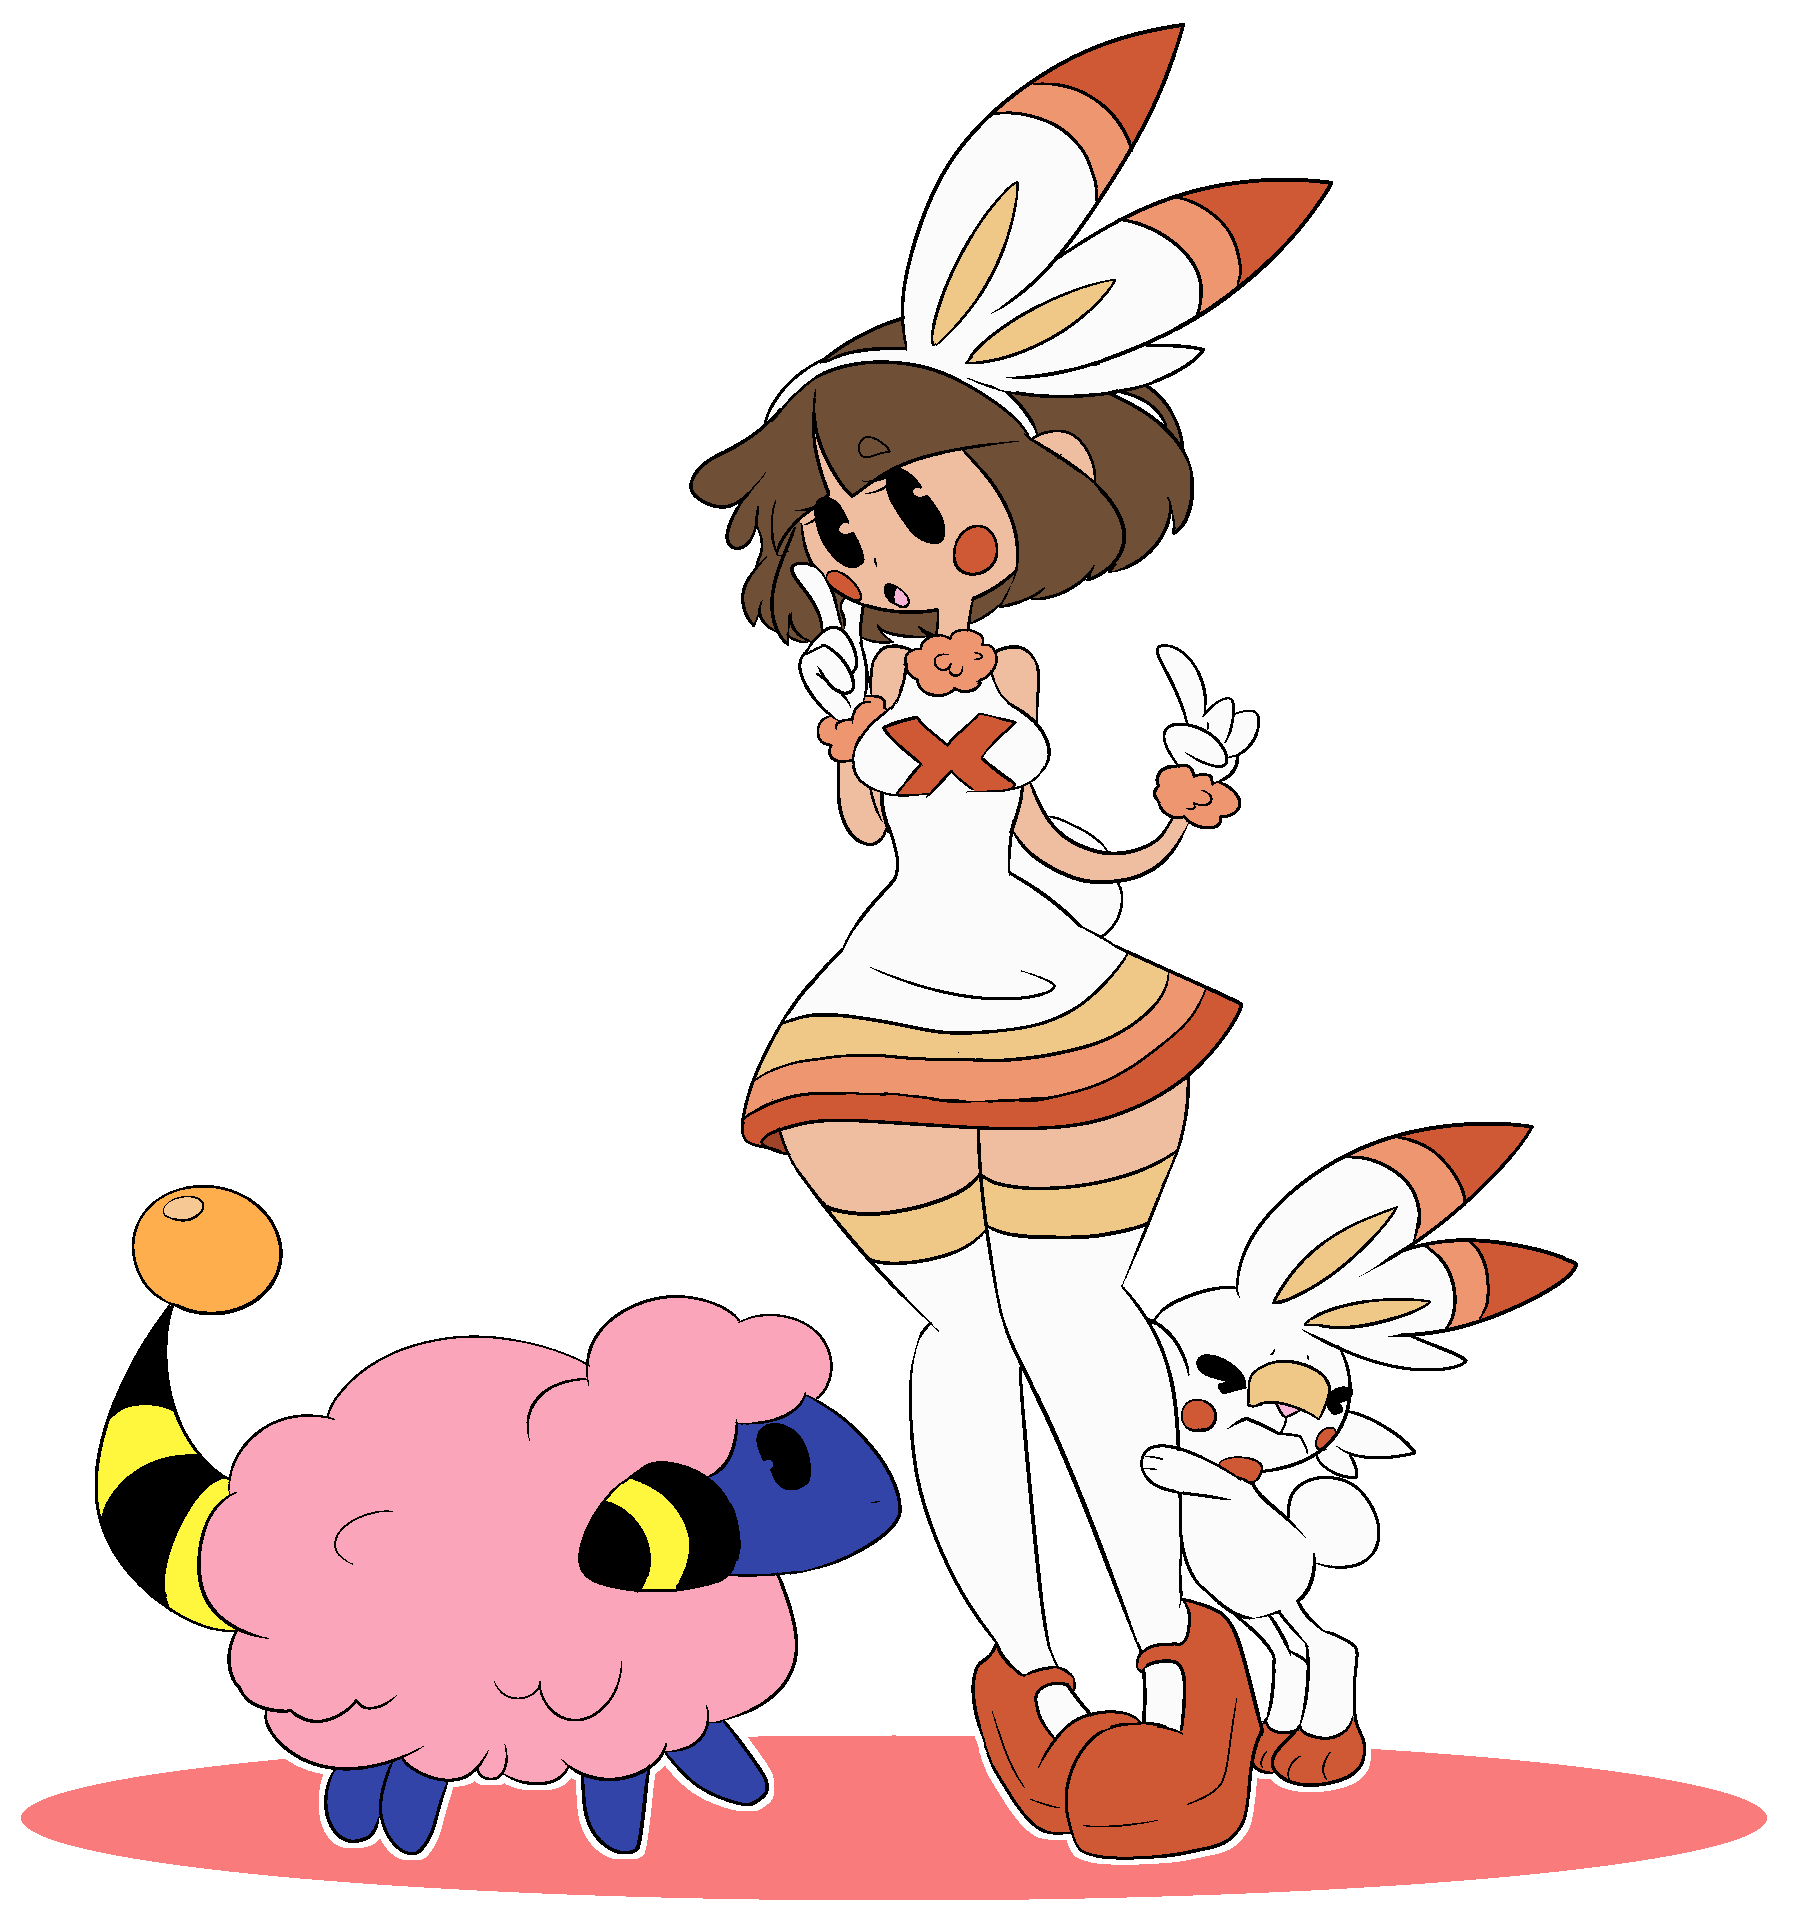 Scorbunny Pokemon PNG Transparent Image